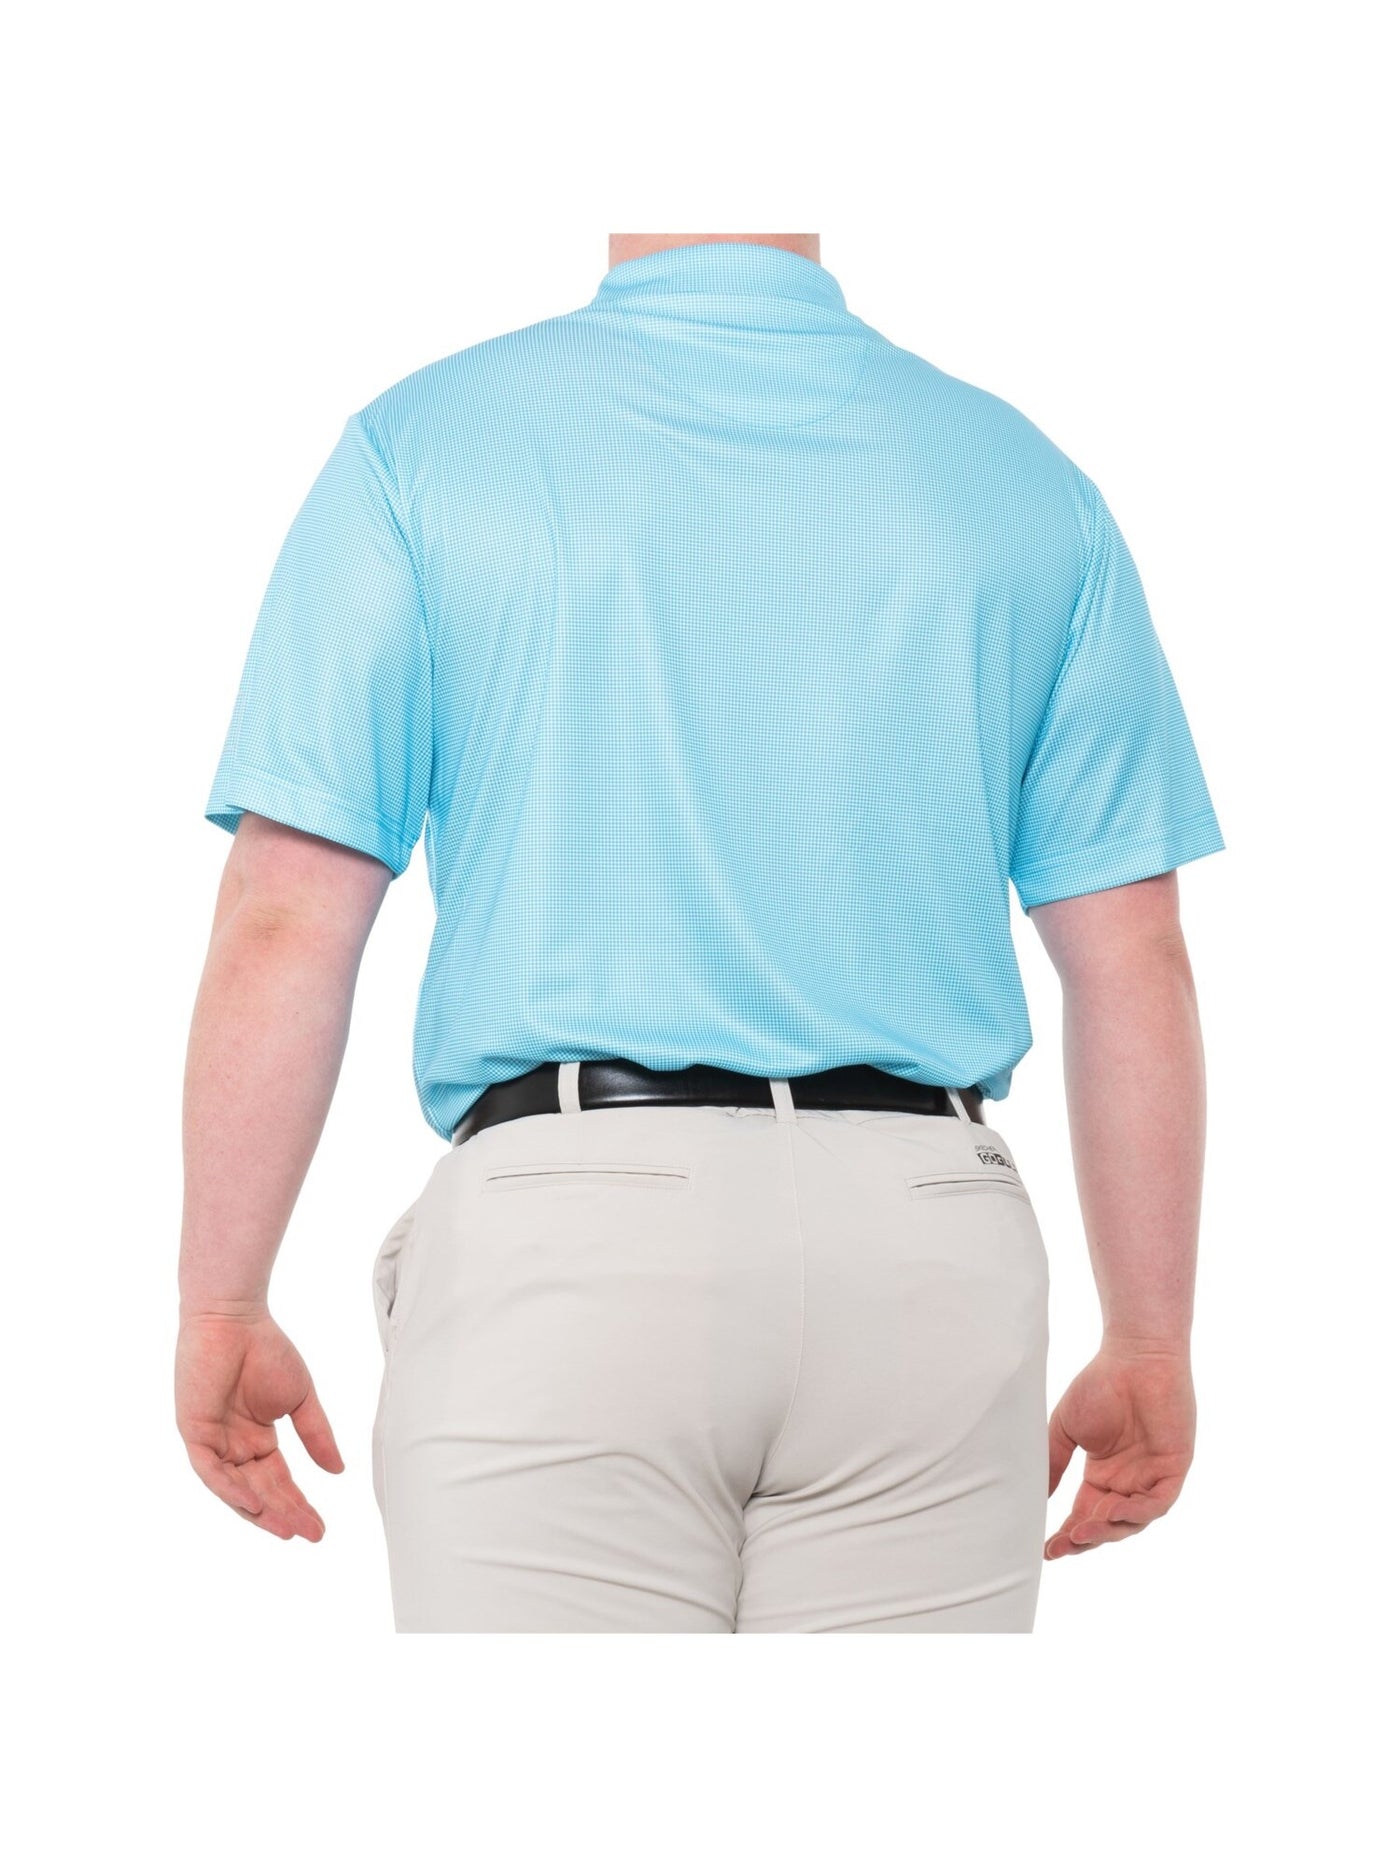 HYBRID APPAREL Mens Light Blue Gingham Short Sleeve Moisture Wicking Polo XL